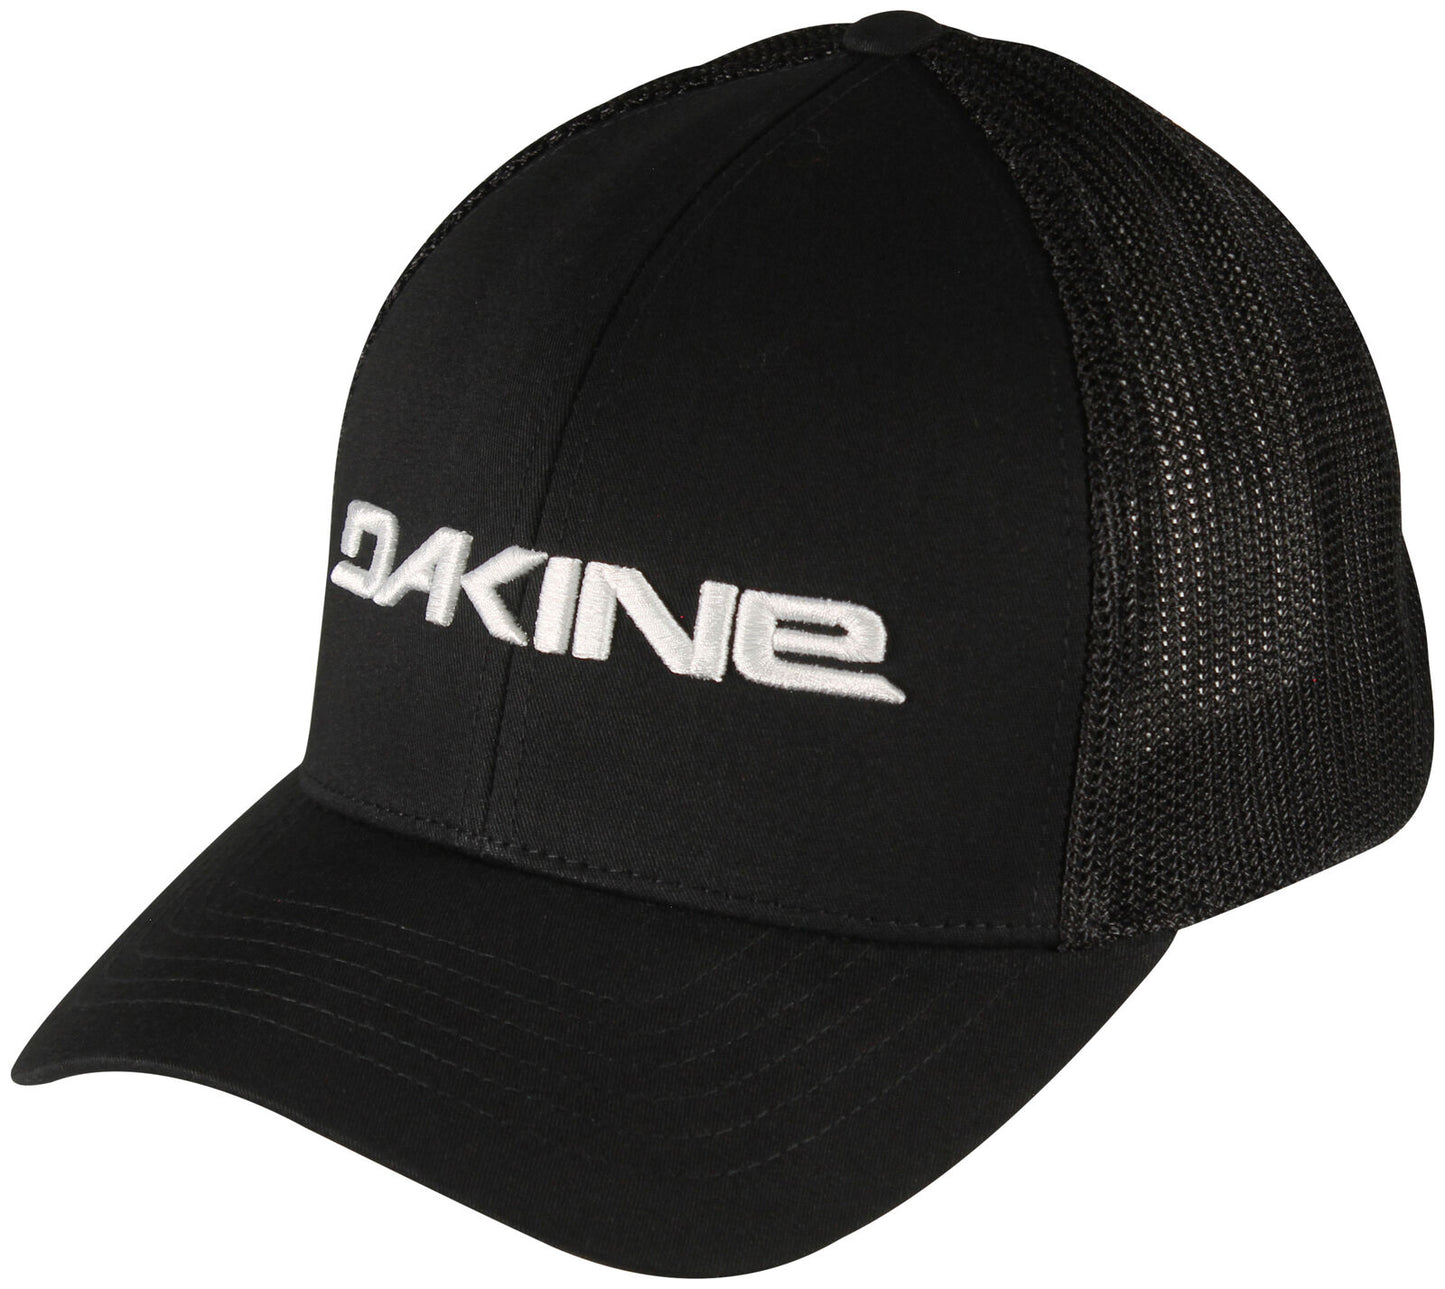 Sideline Trucker Hat Black